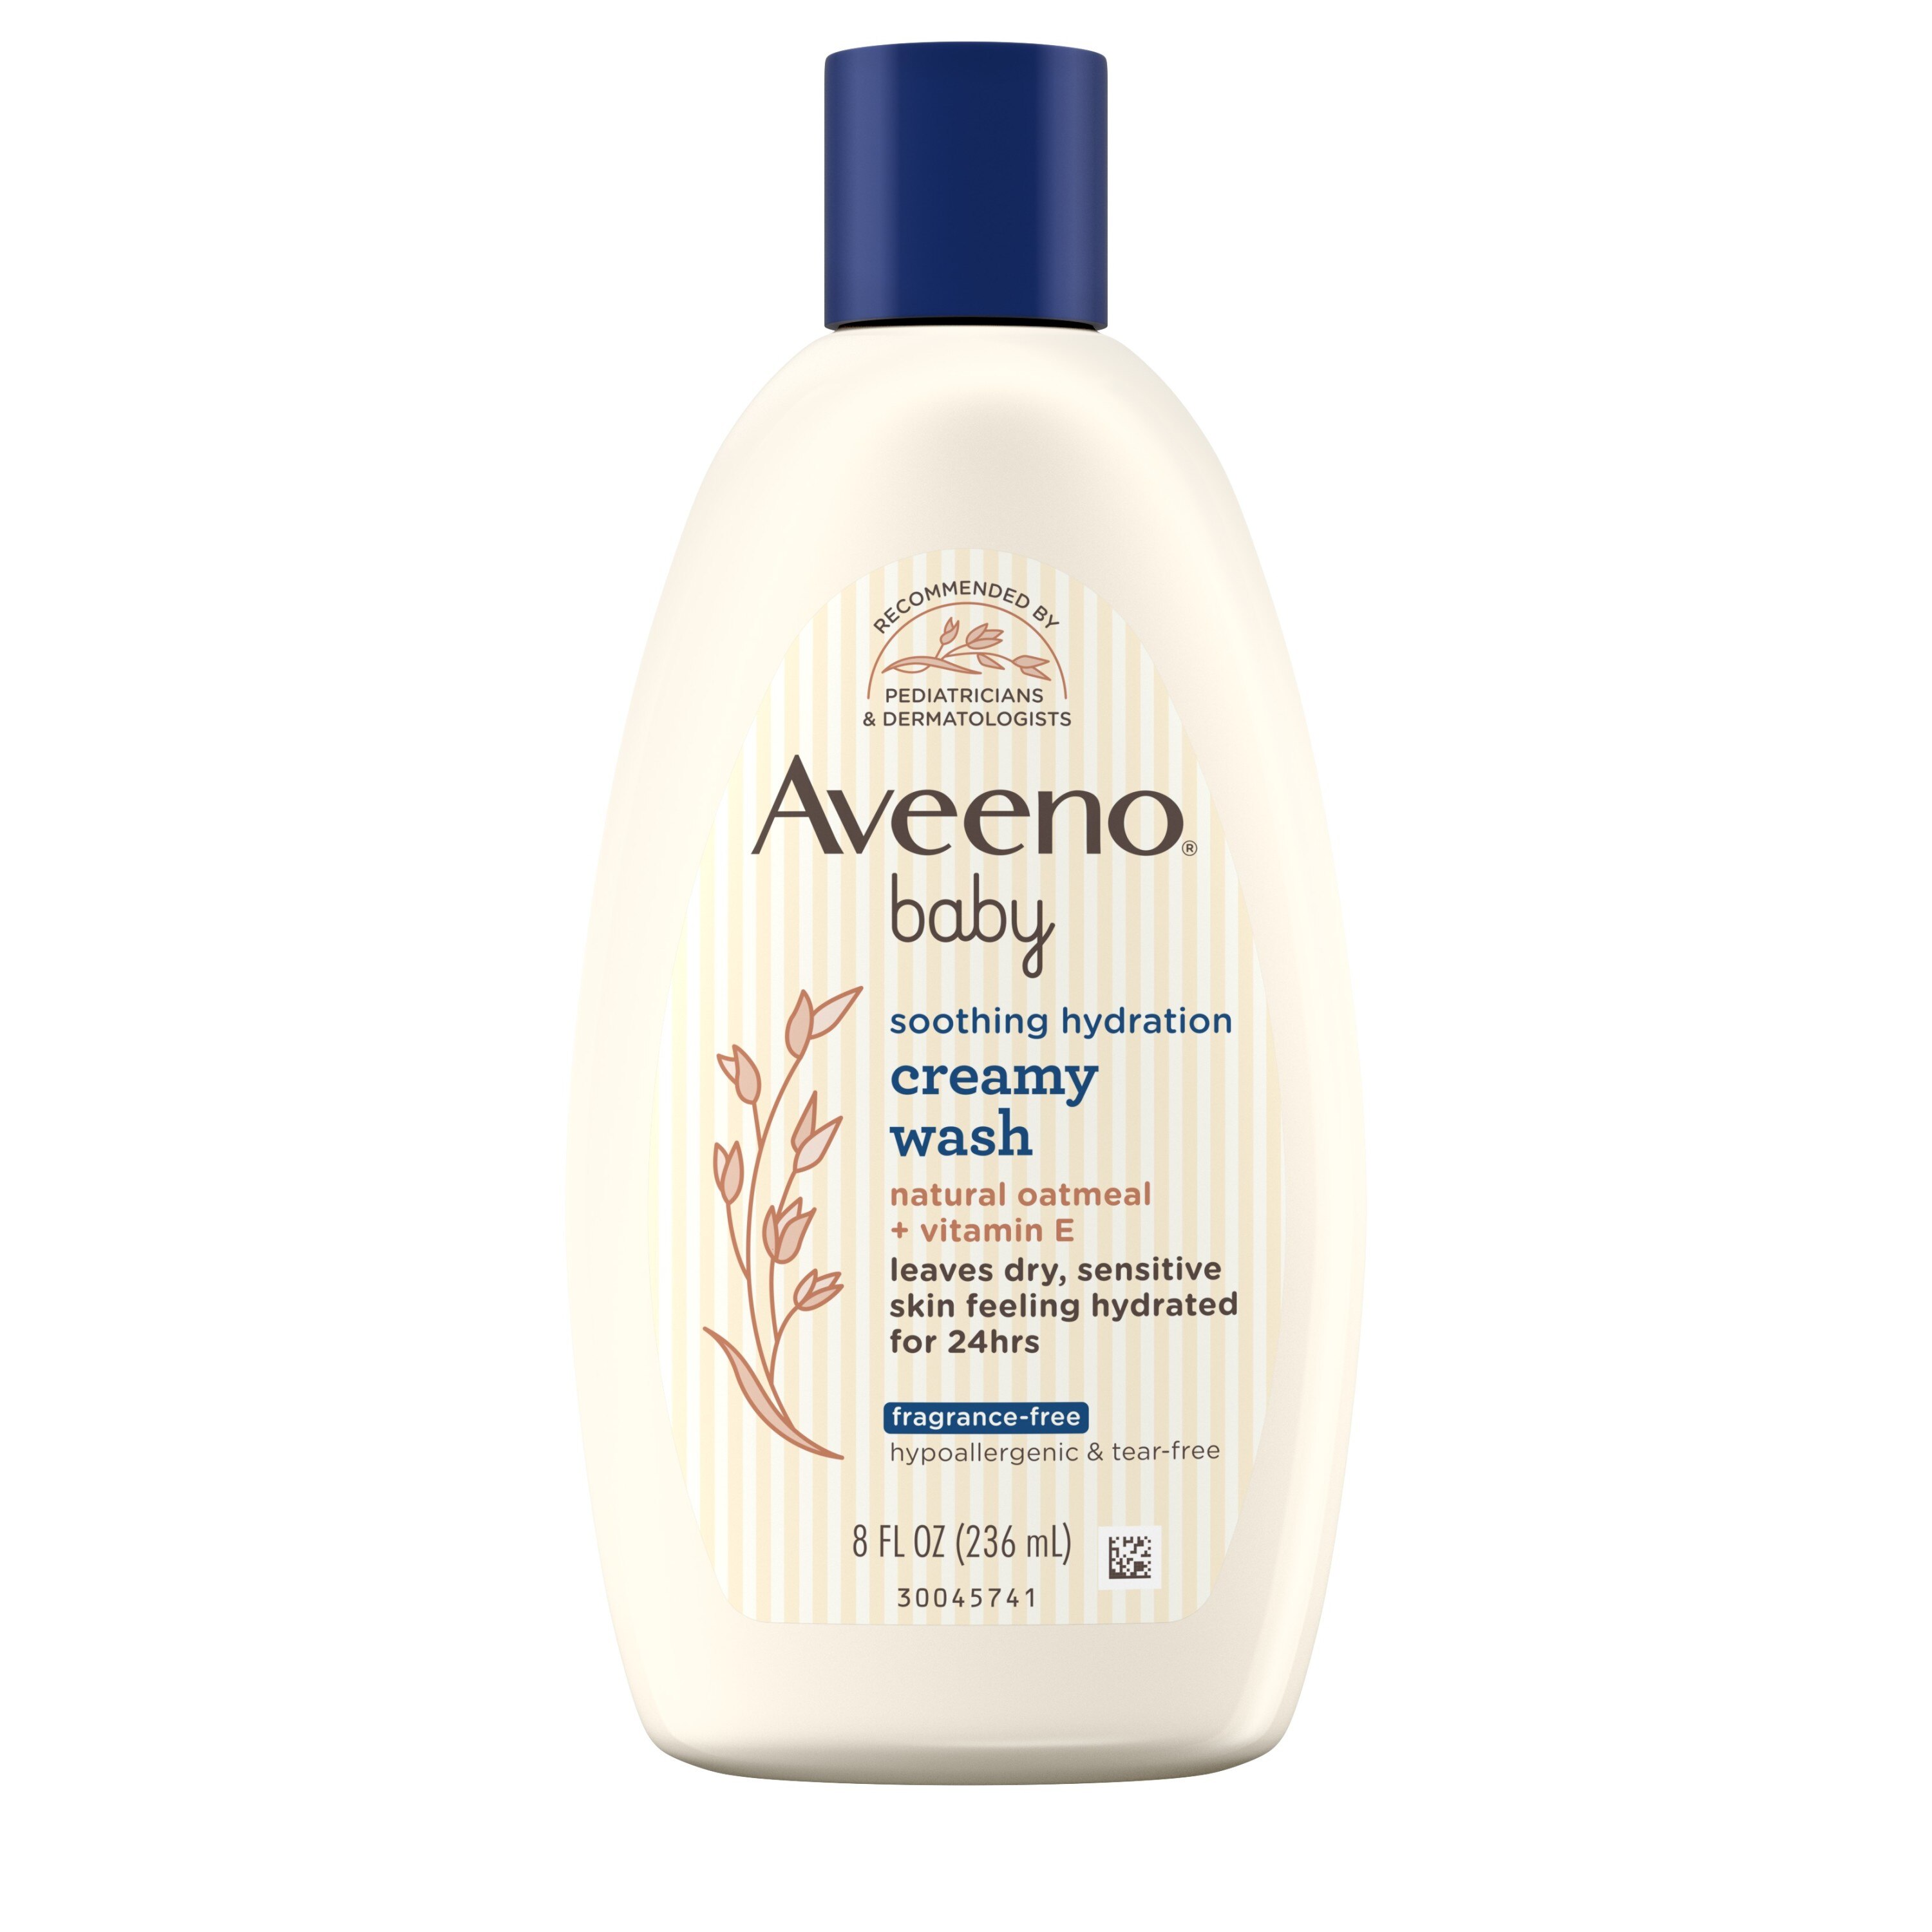 Aveeno Baby Soothing Hydration Creamy Wash, Natural Oatmeal, 8 fl. oz